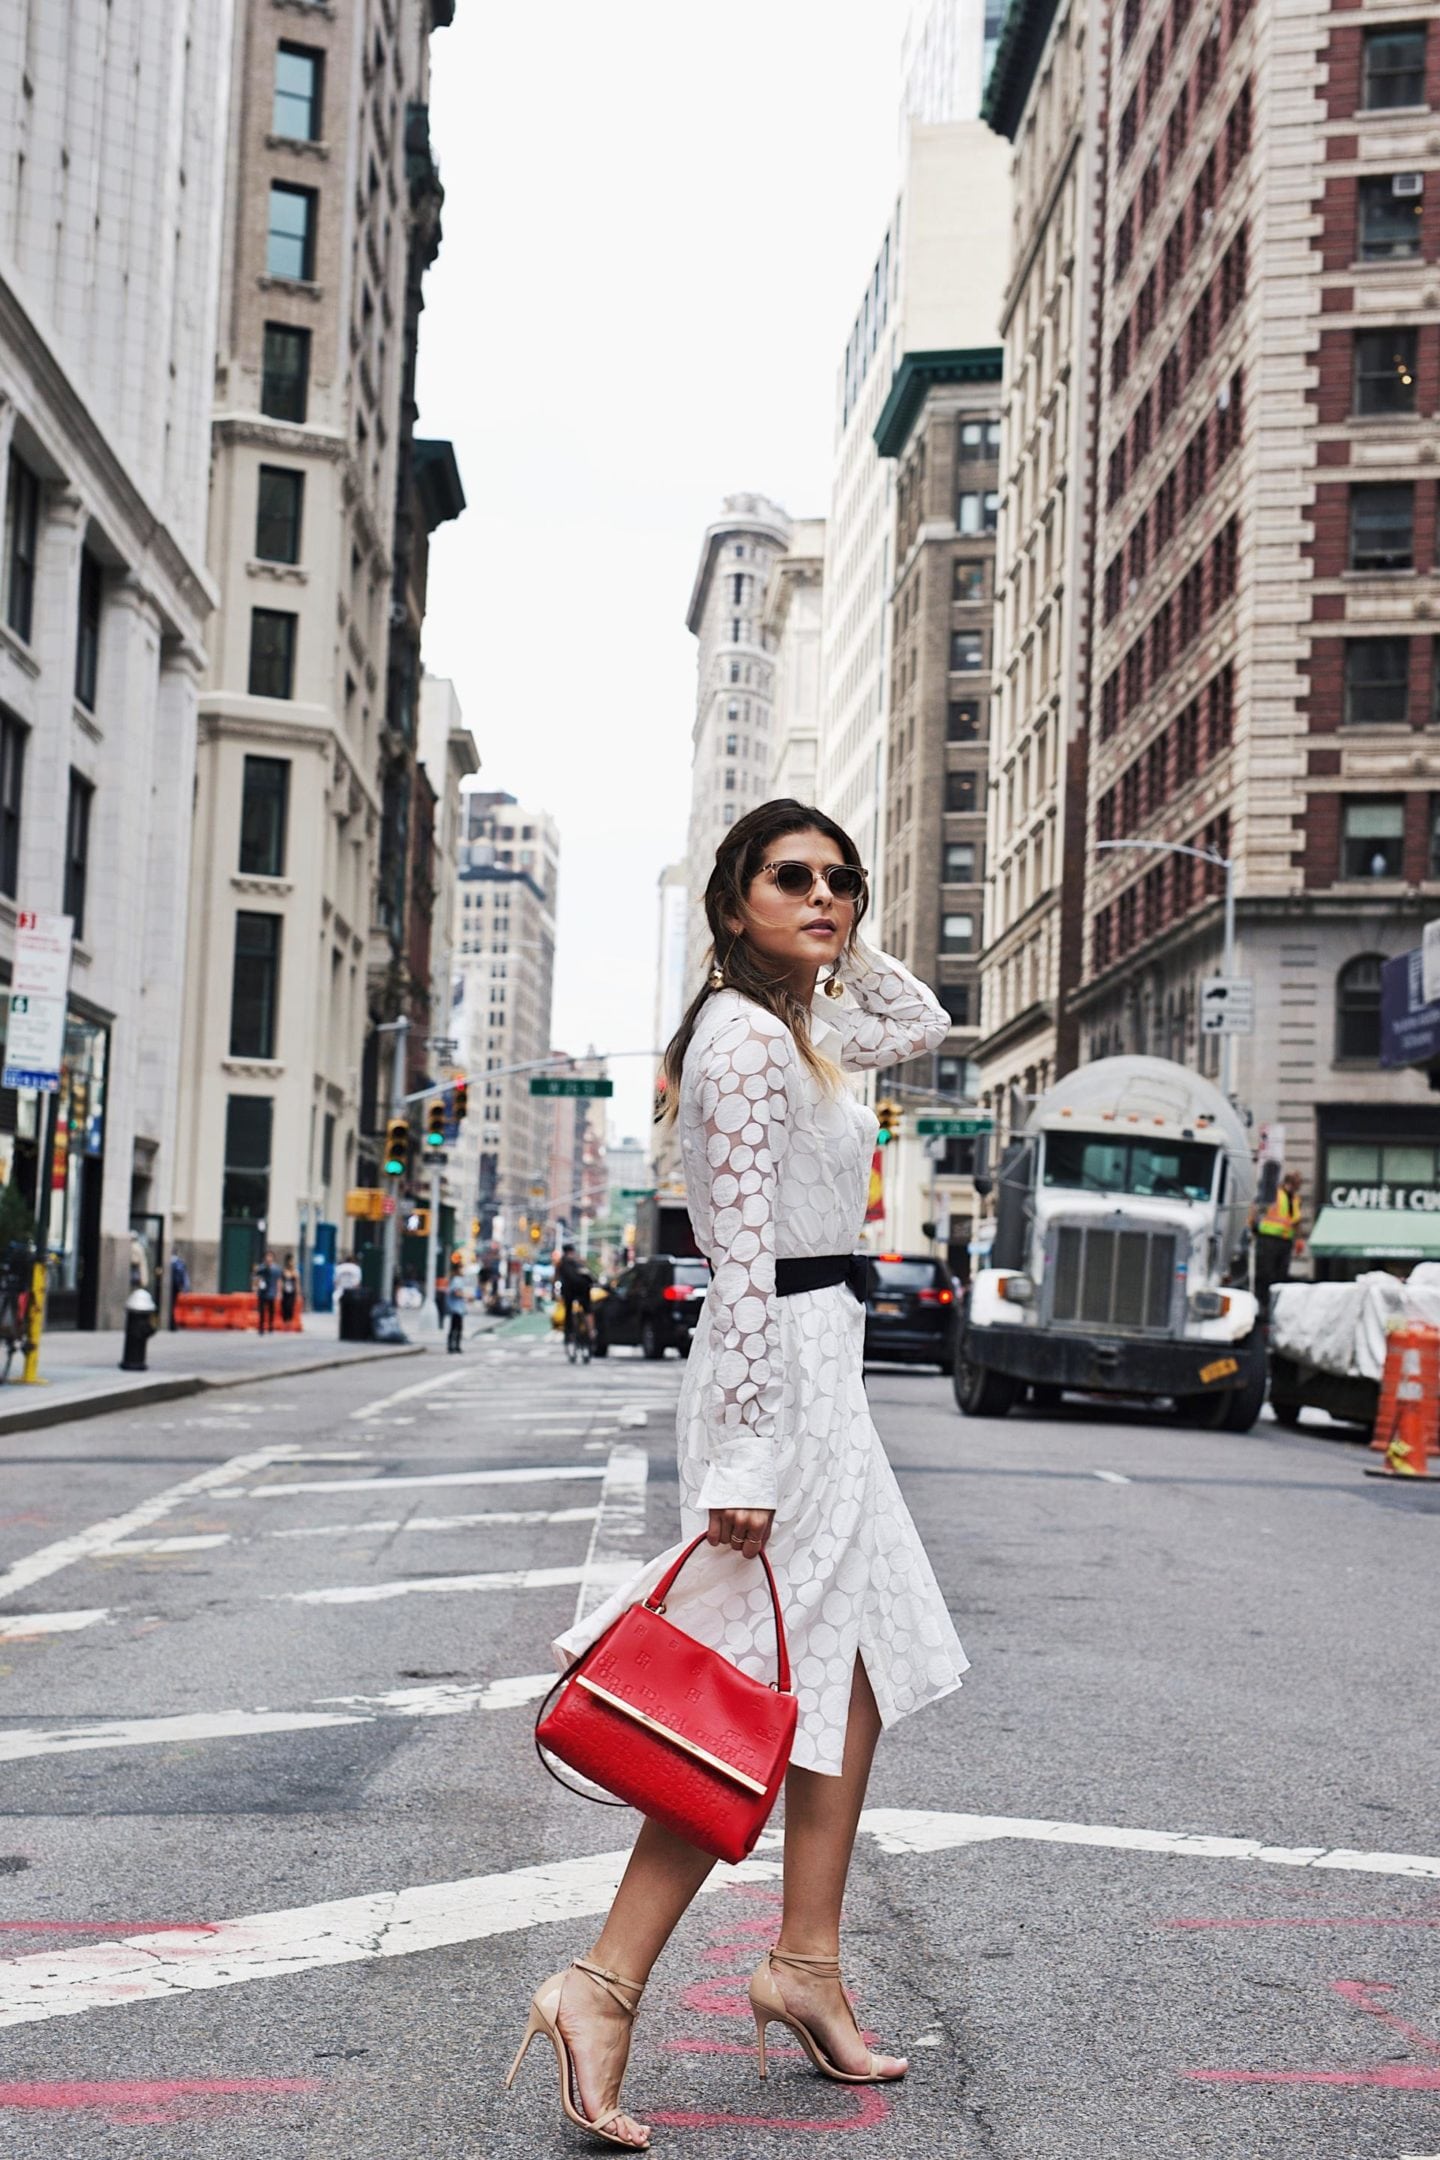 White Lace Dress, Nude Heels, Red Carolina Herrera Handbag in NYC